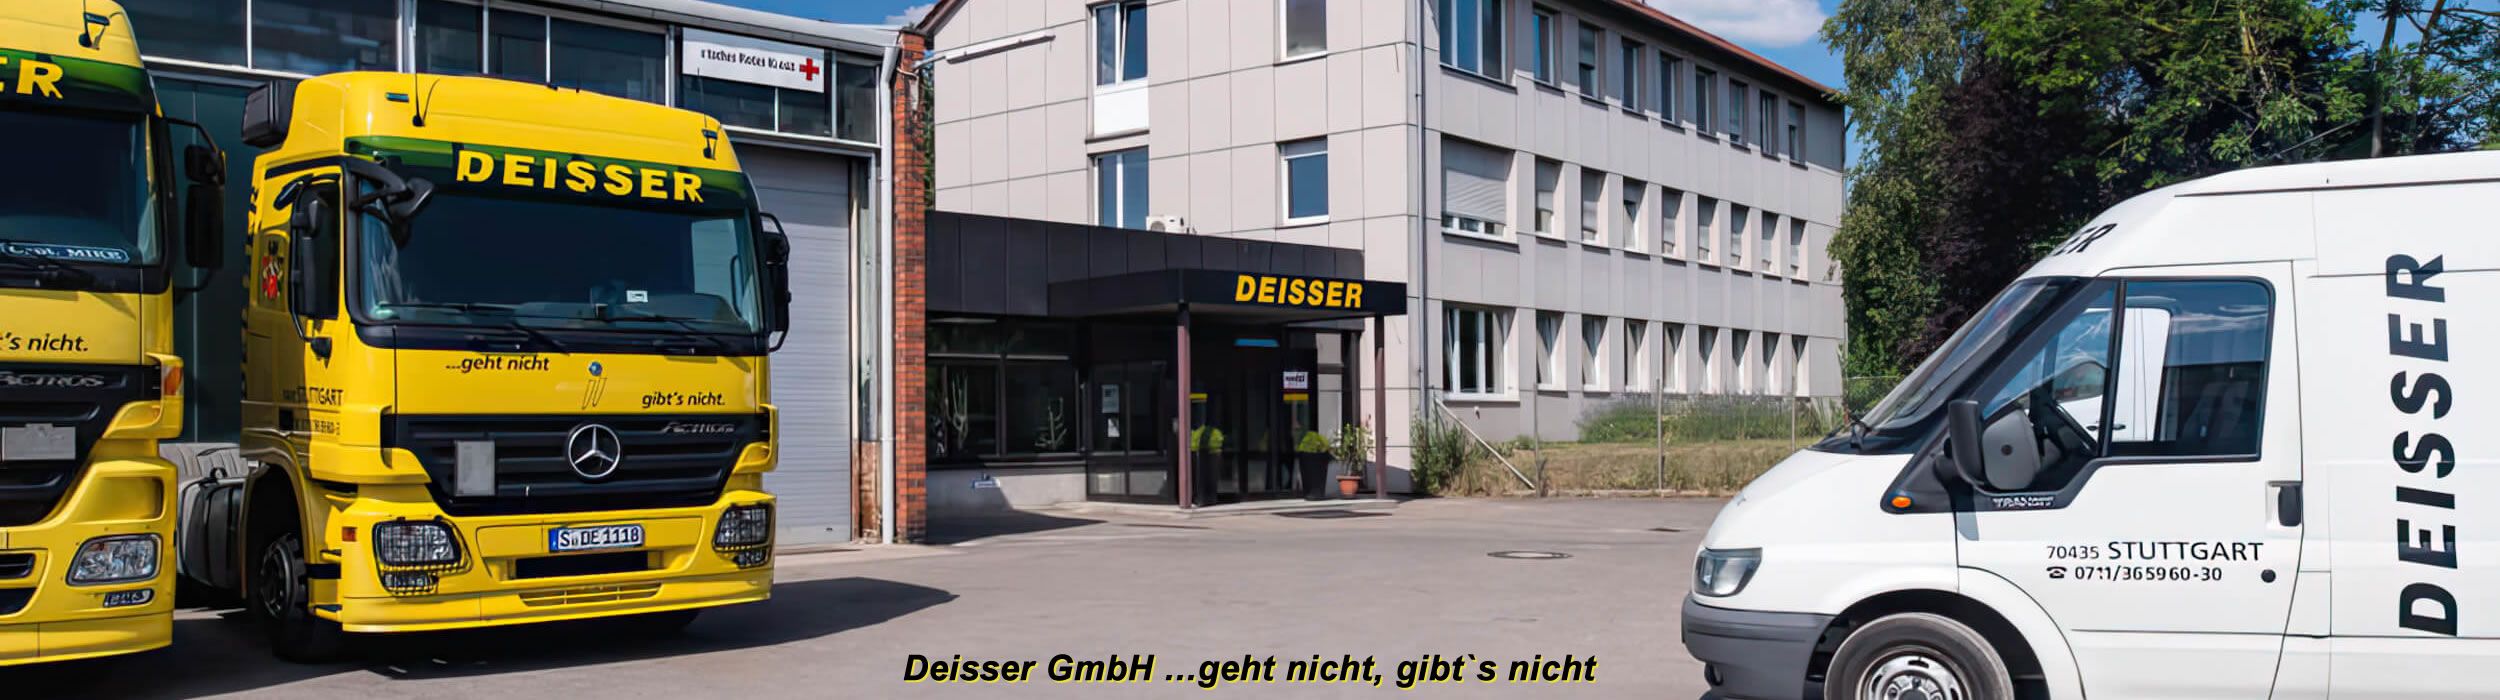 Deisser GmbH / Transportlogistik Seecontainer / Ansprechpartner